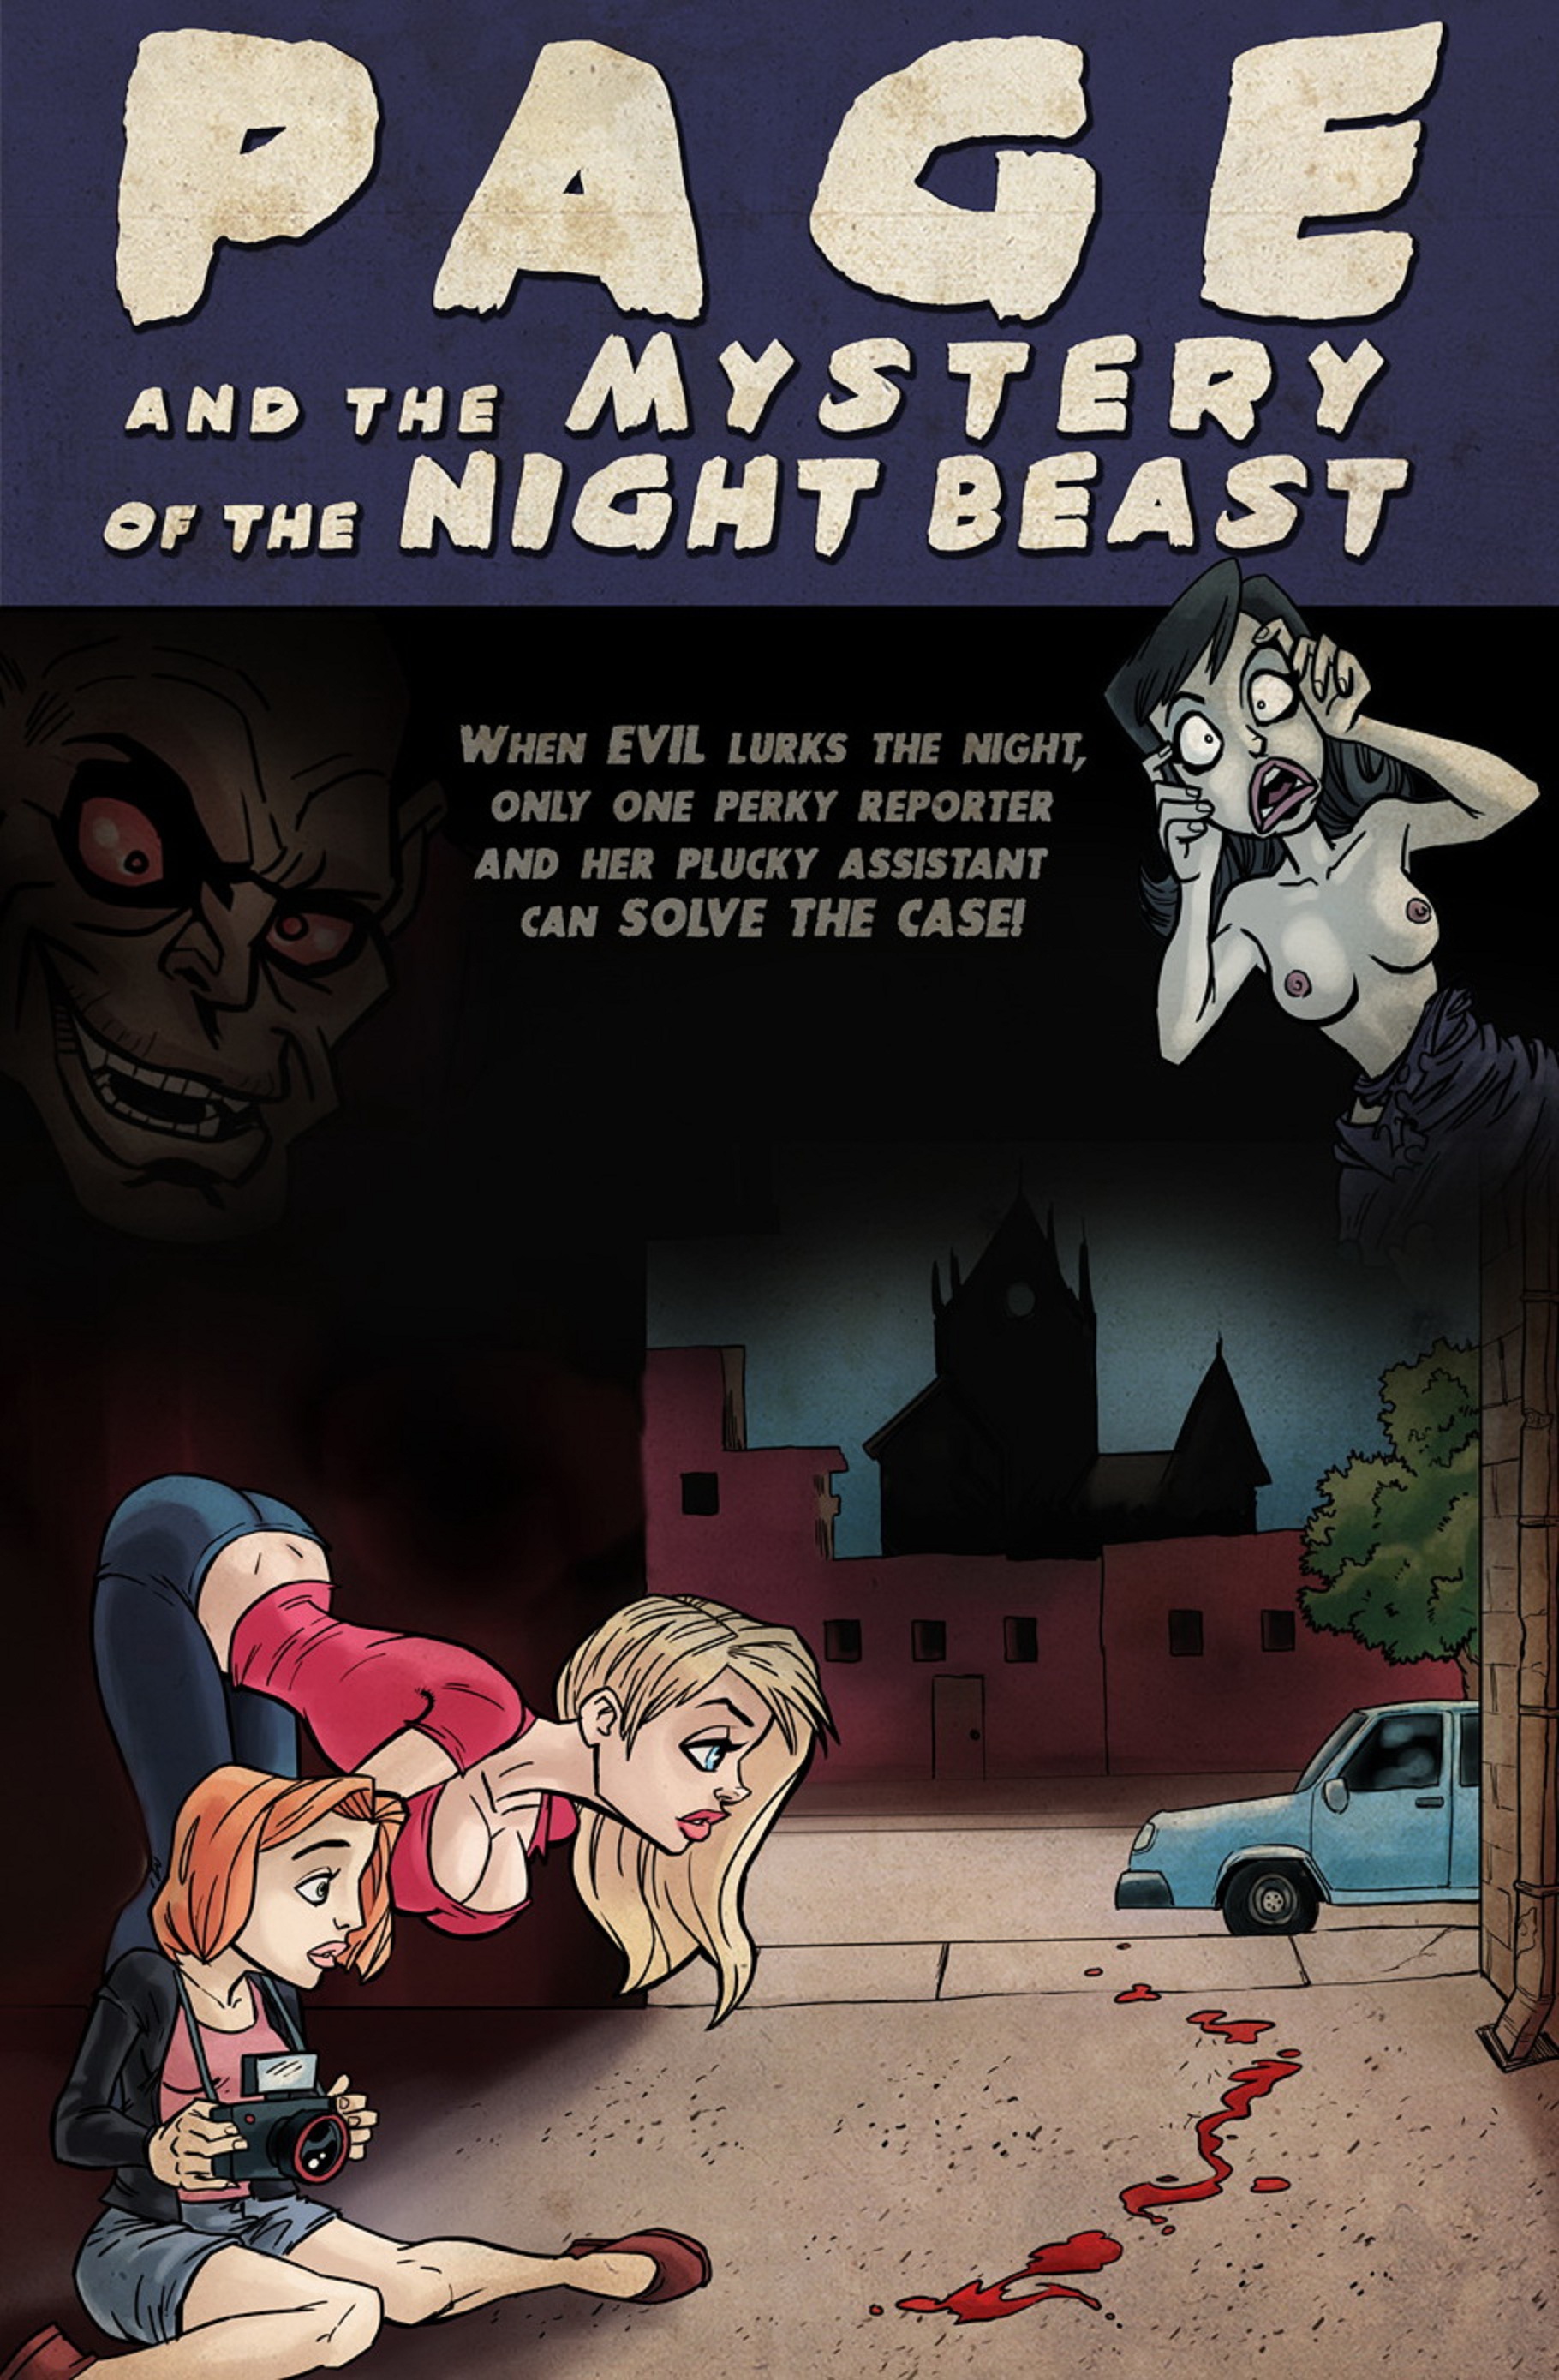 Mystery of the Night Beast00